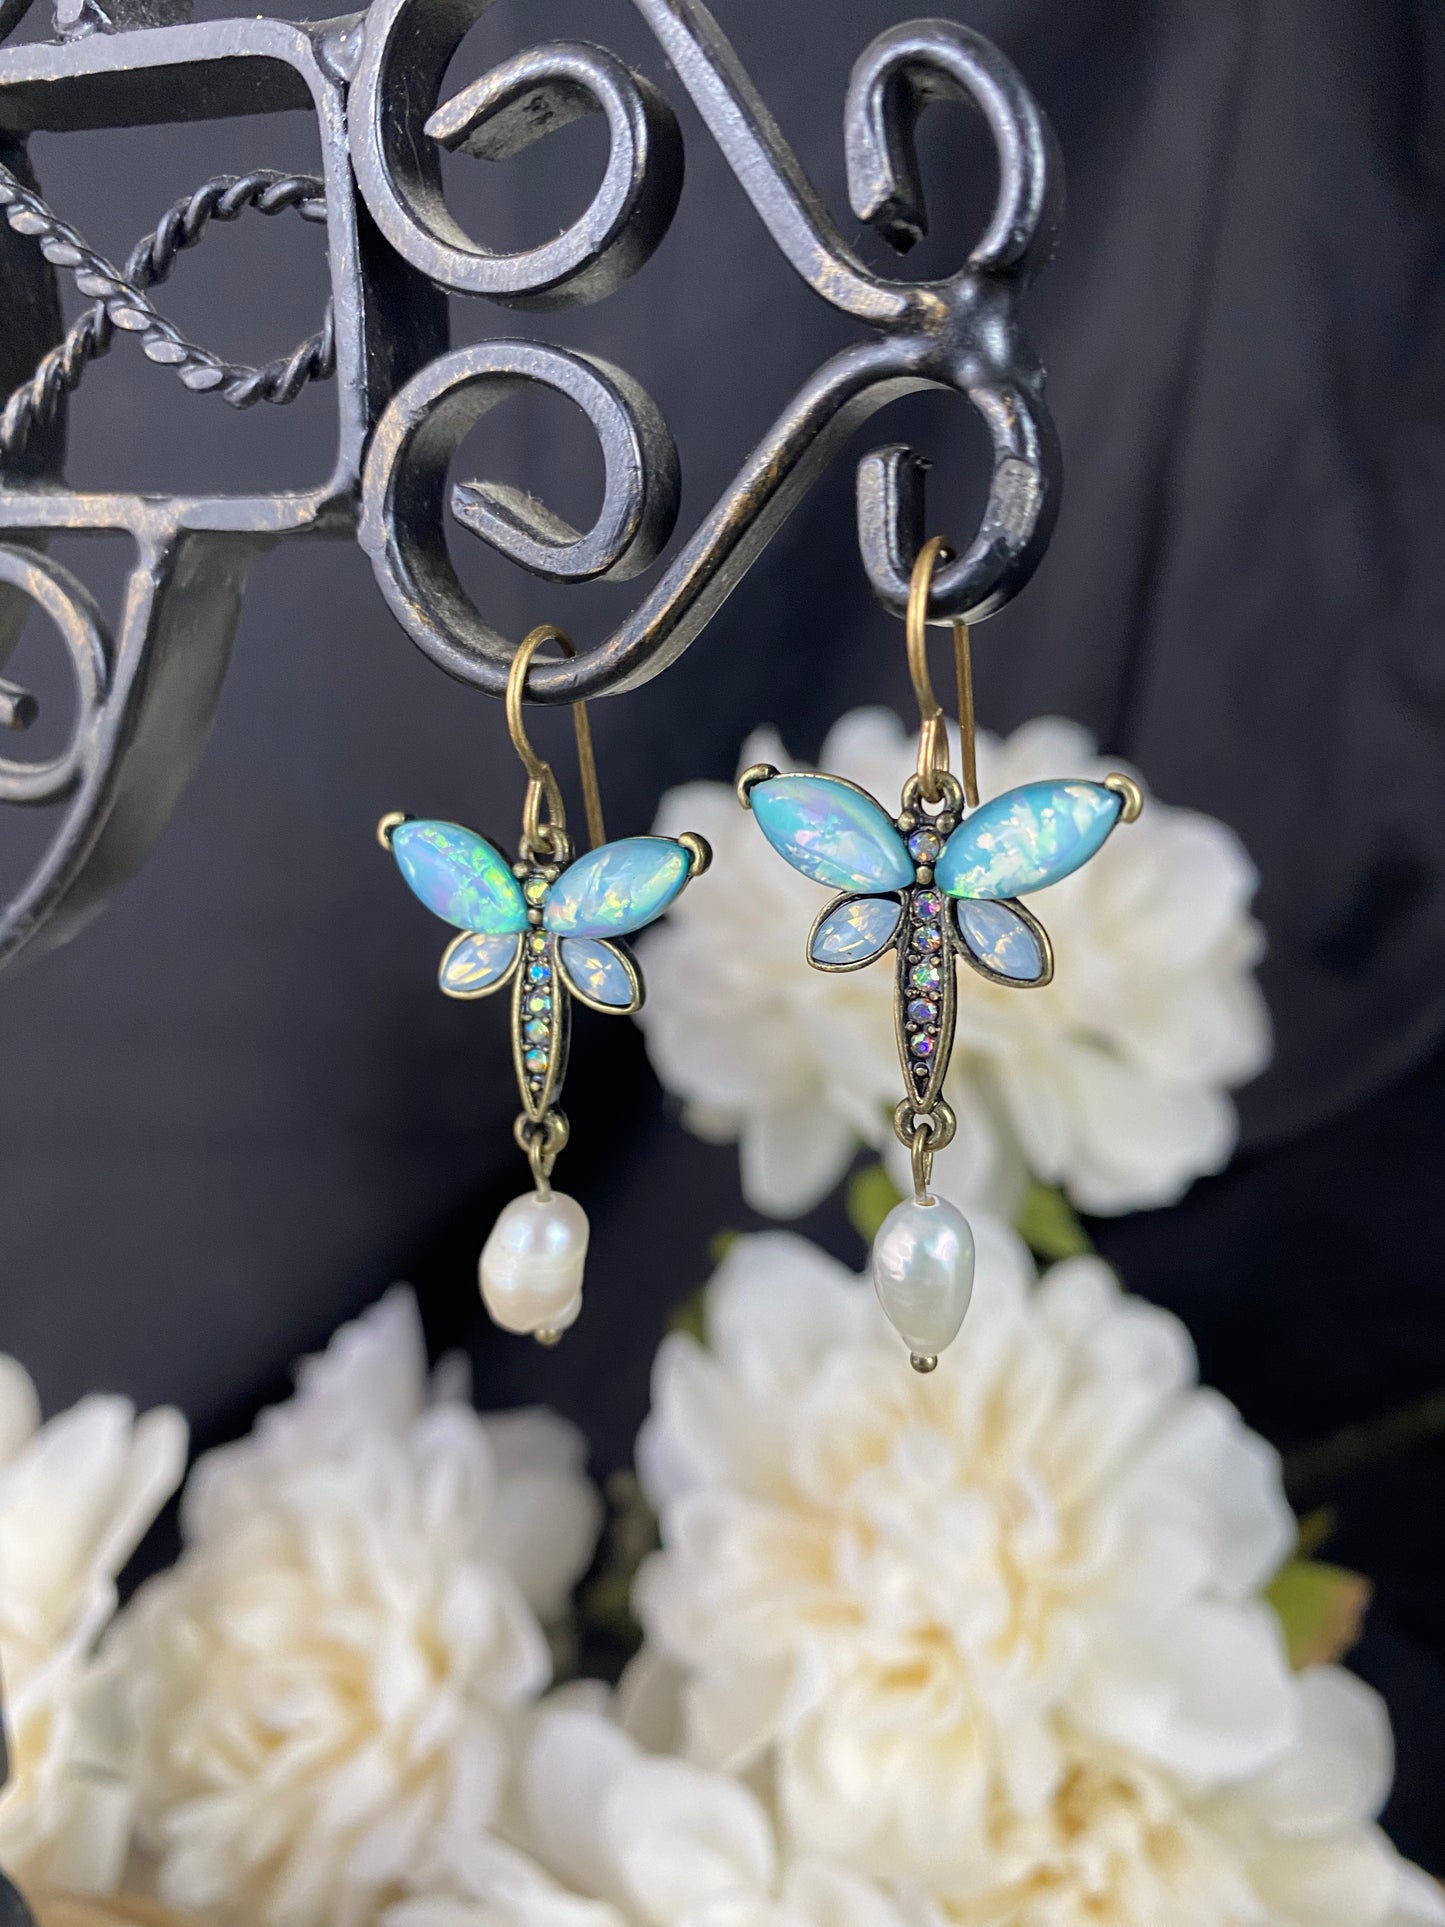 Dragonfly charms, rhinestones, pearls, earrings, jewelry